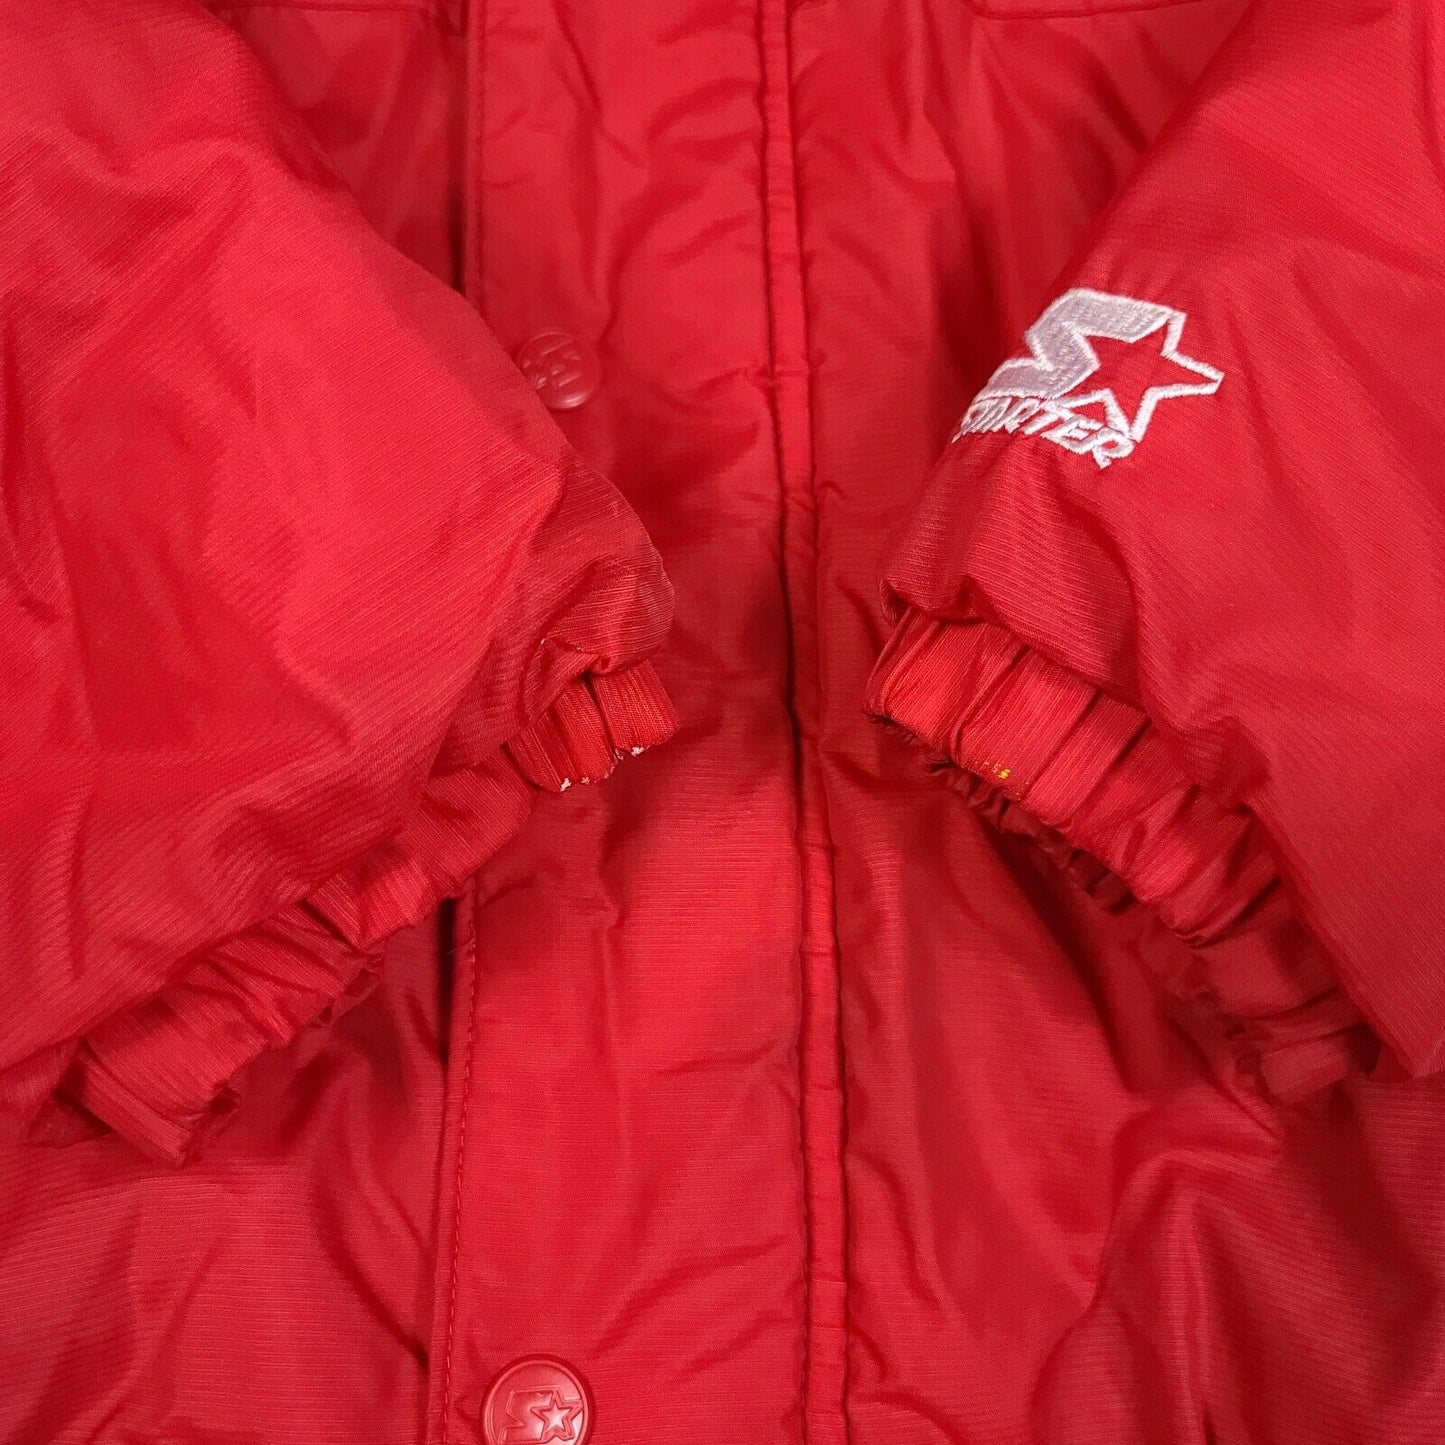 Nebraska Corn Huskers Red Starter Winter Full Zip Jacket Coat